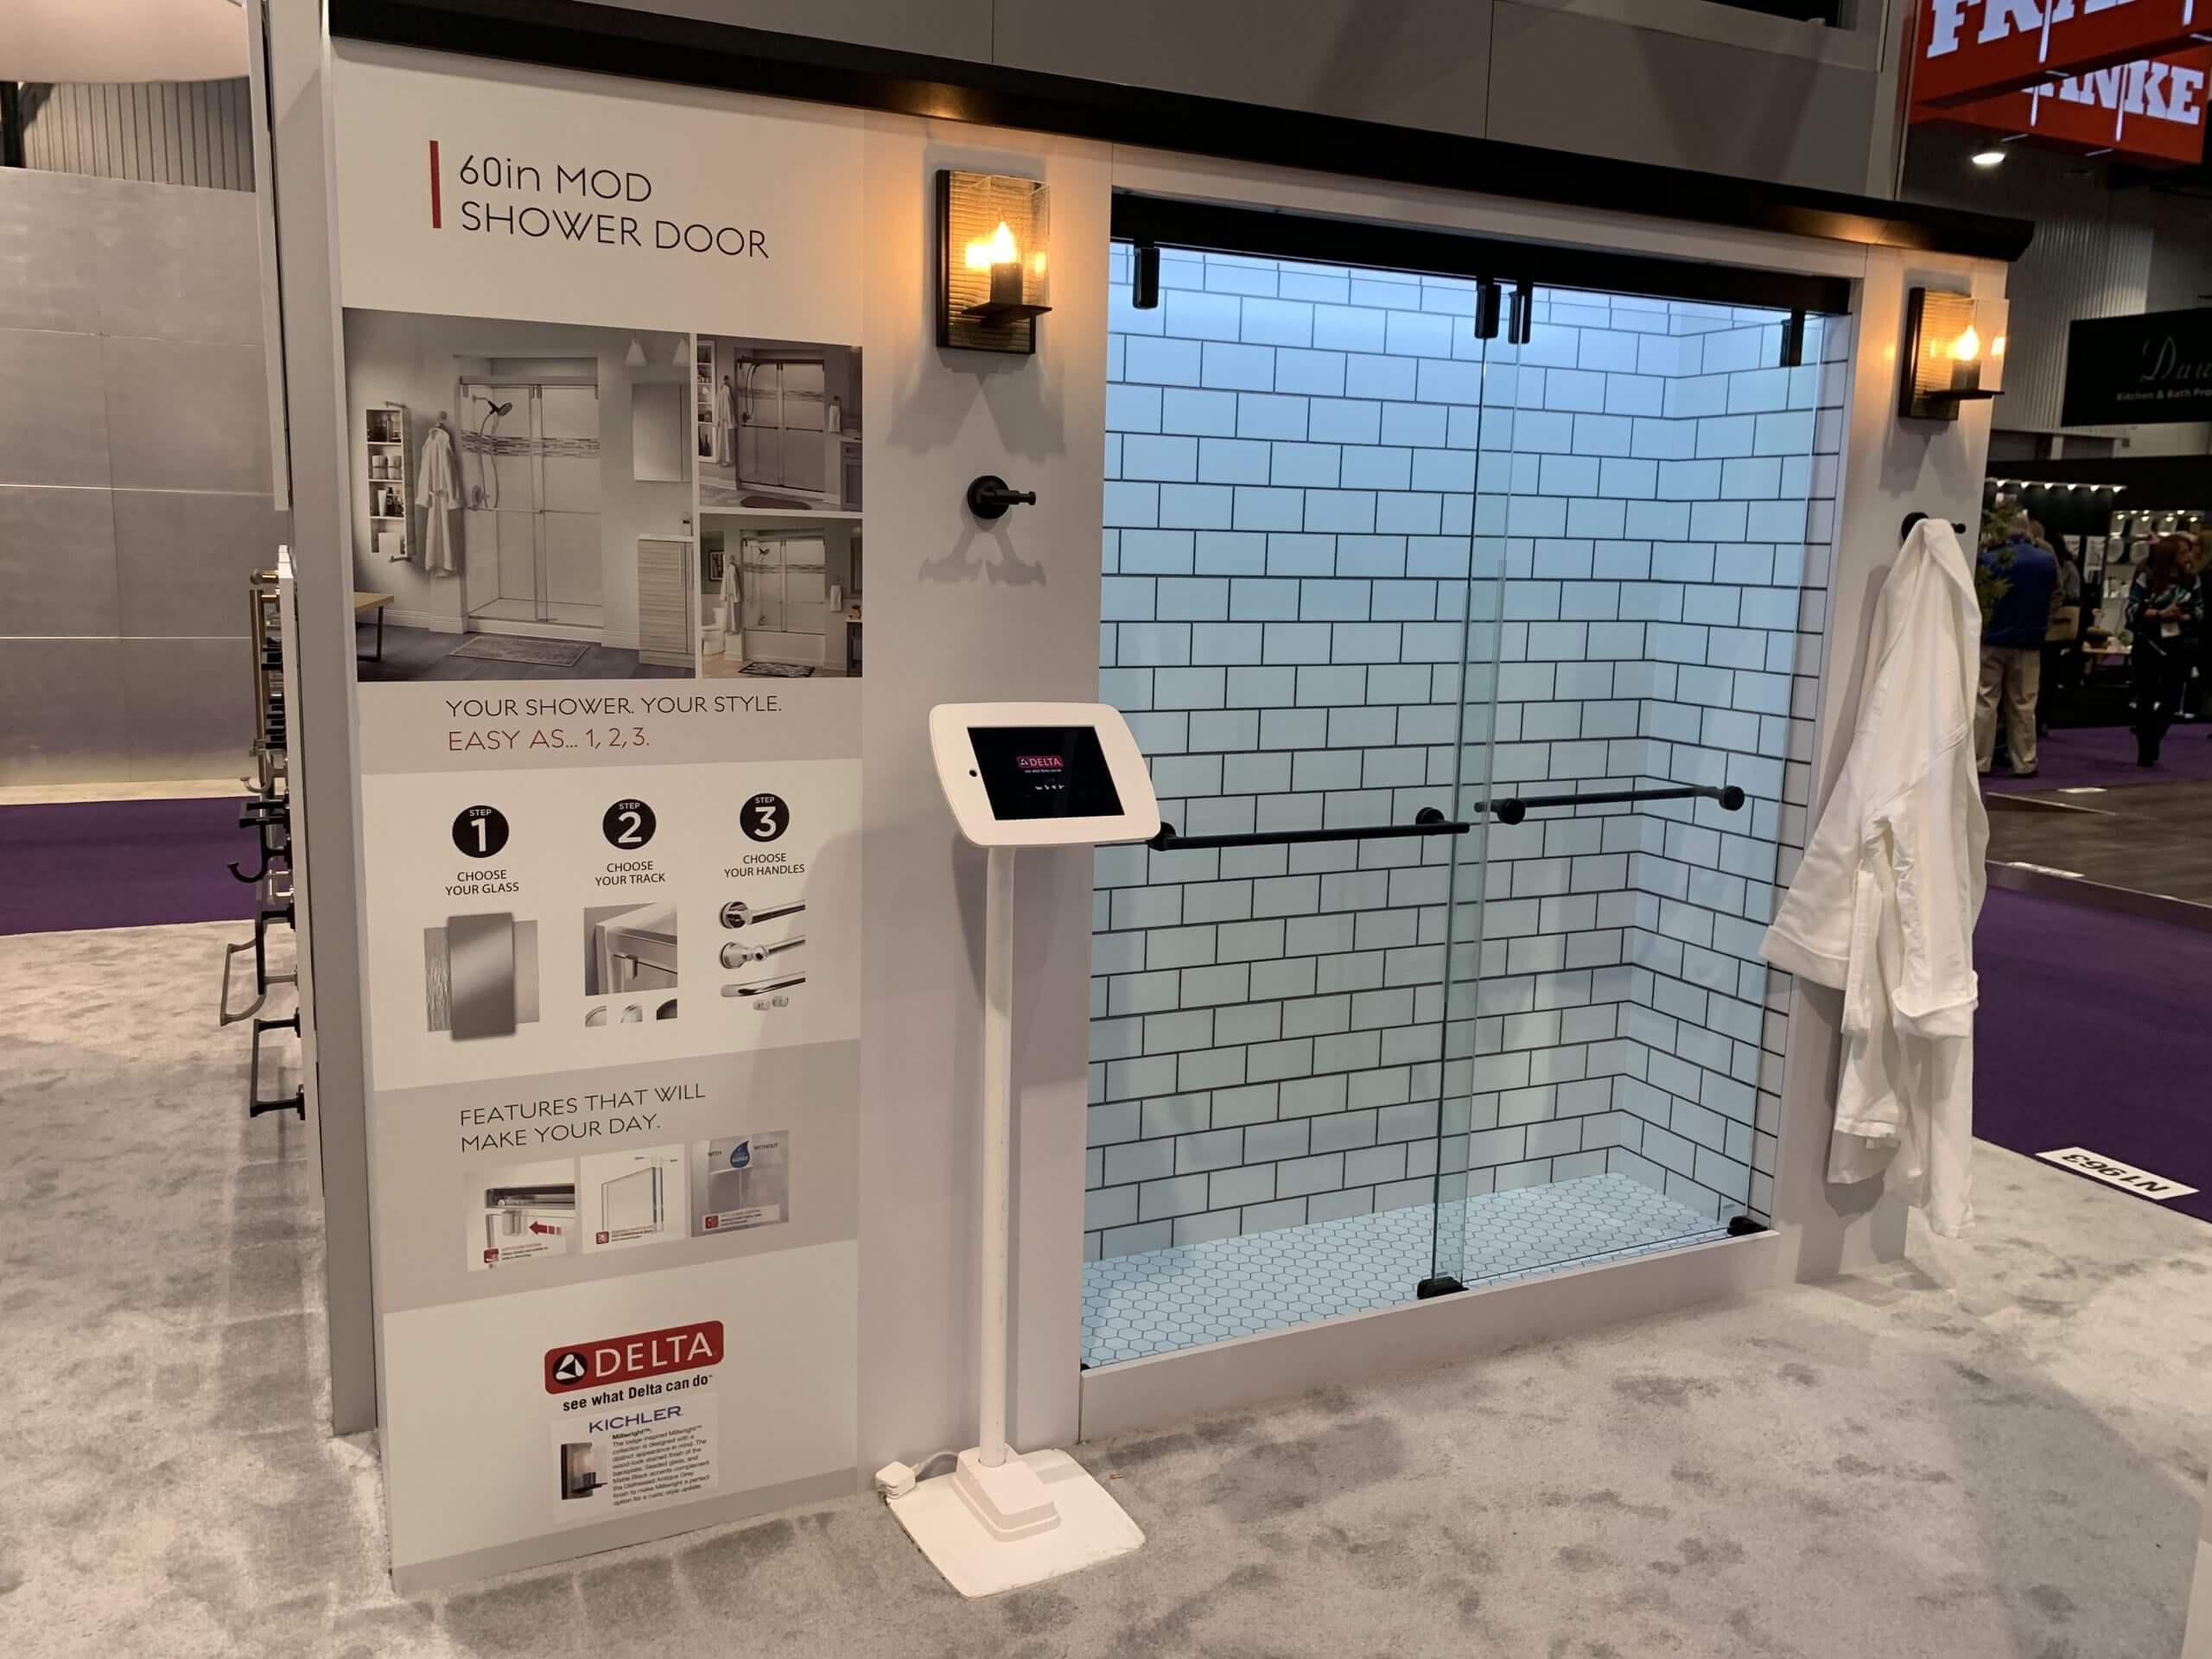 Liberty Hardware exhibit with product display graphics and iPad kiosk